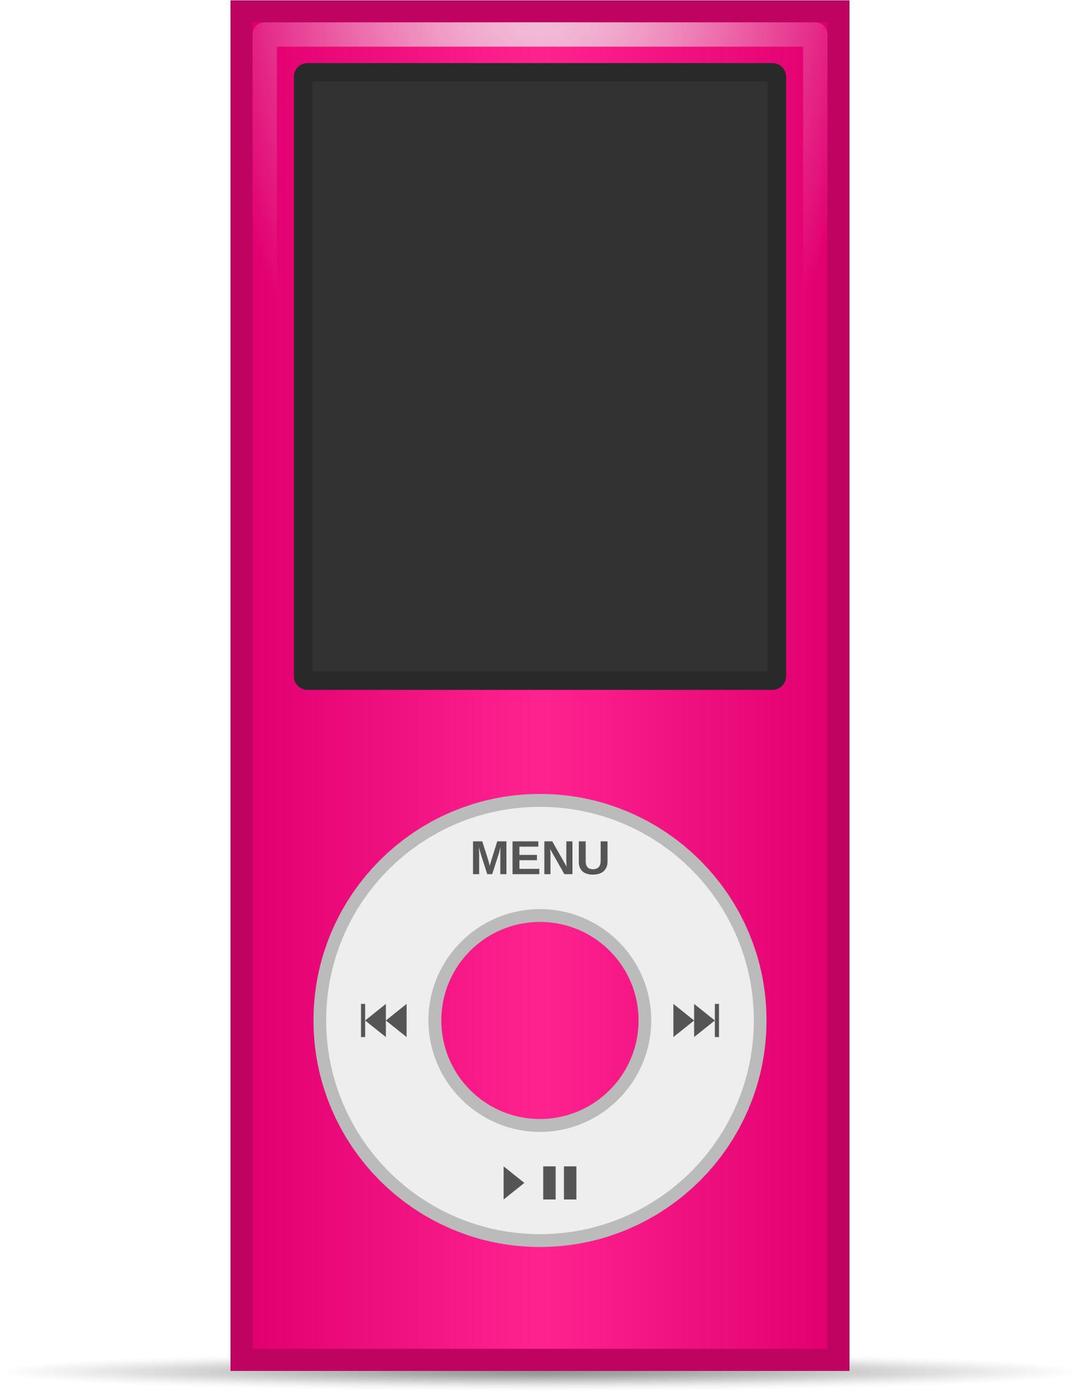 Multimedia player iPod png transparent